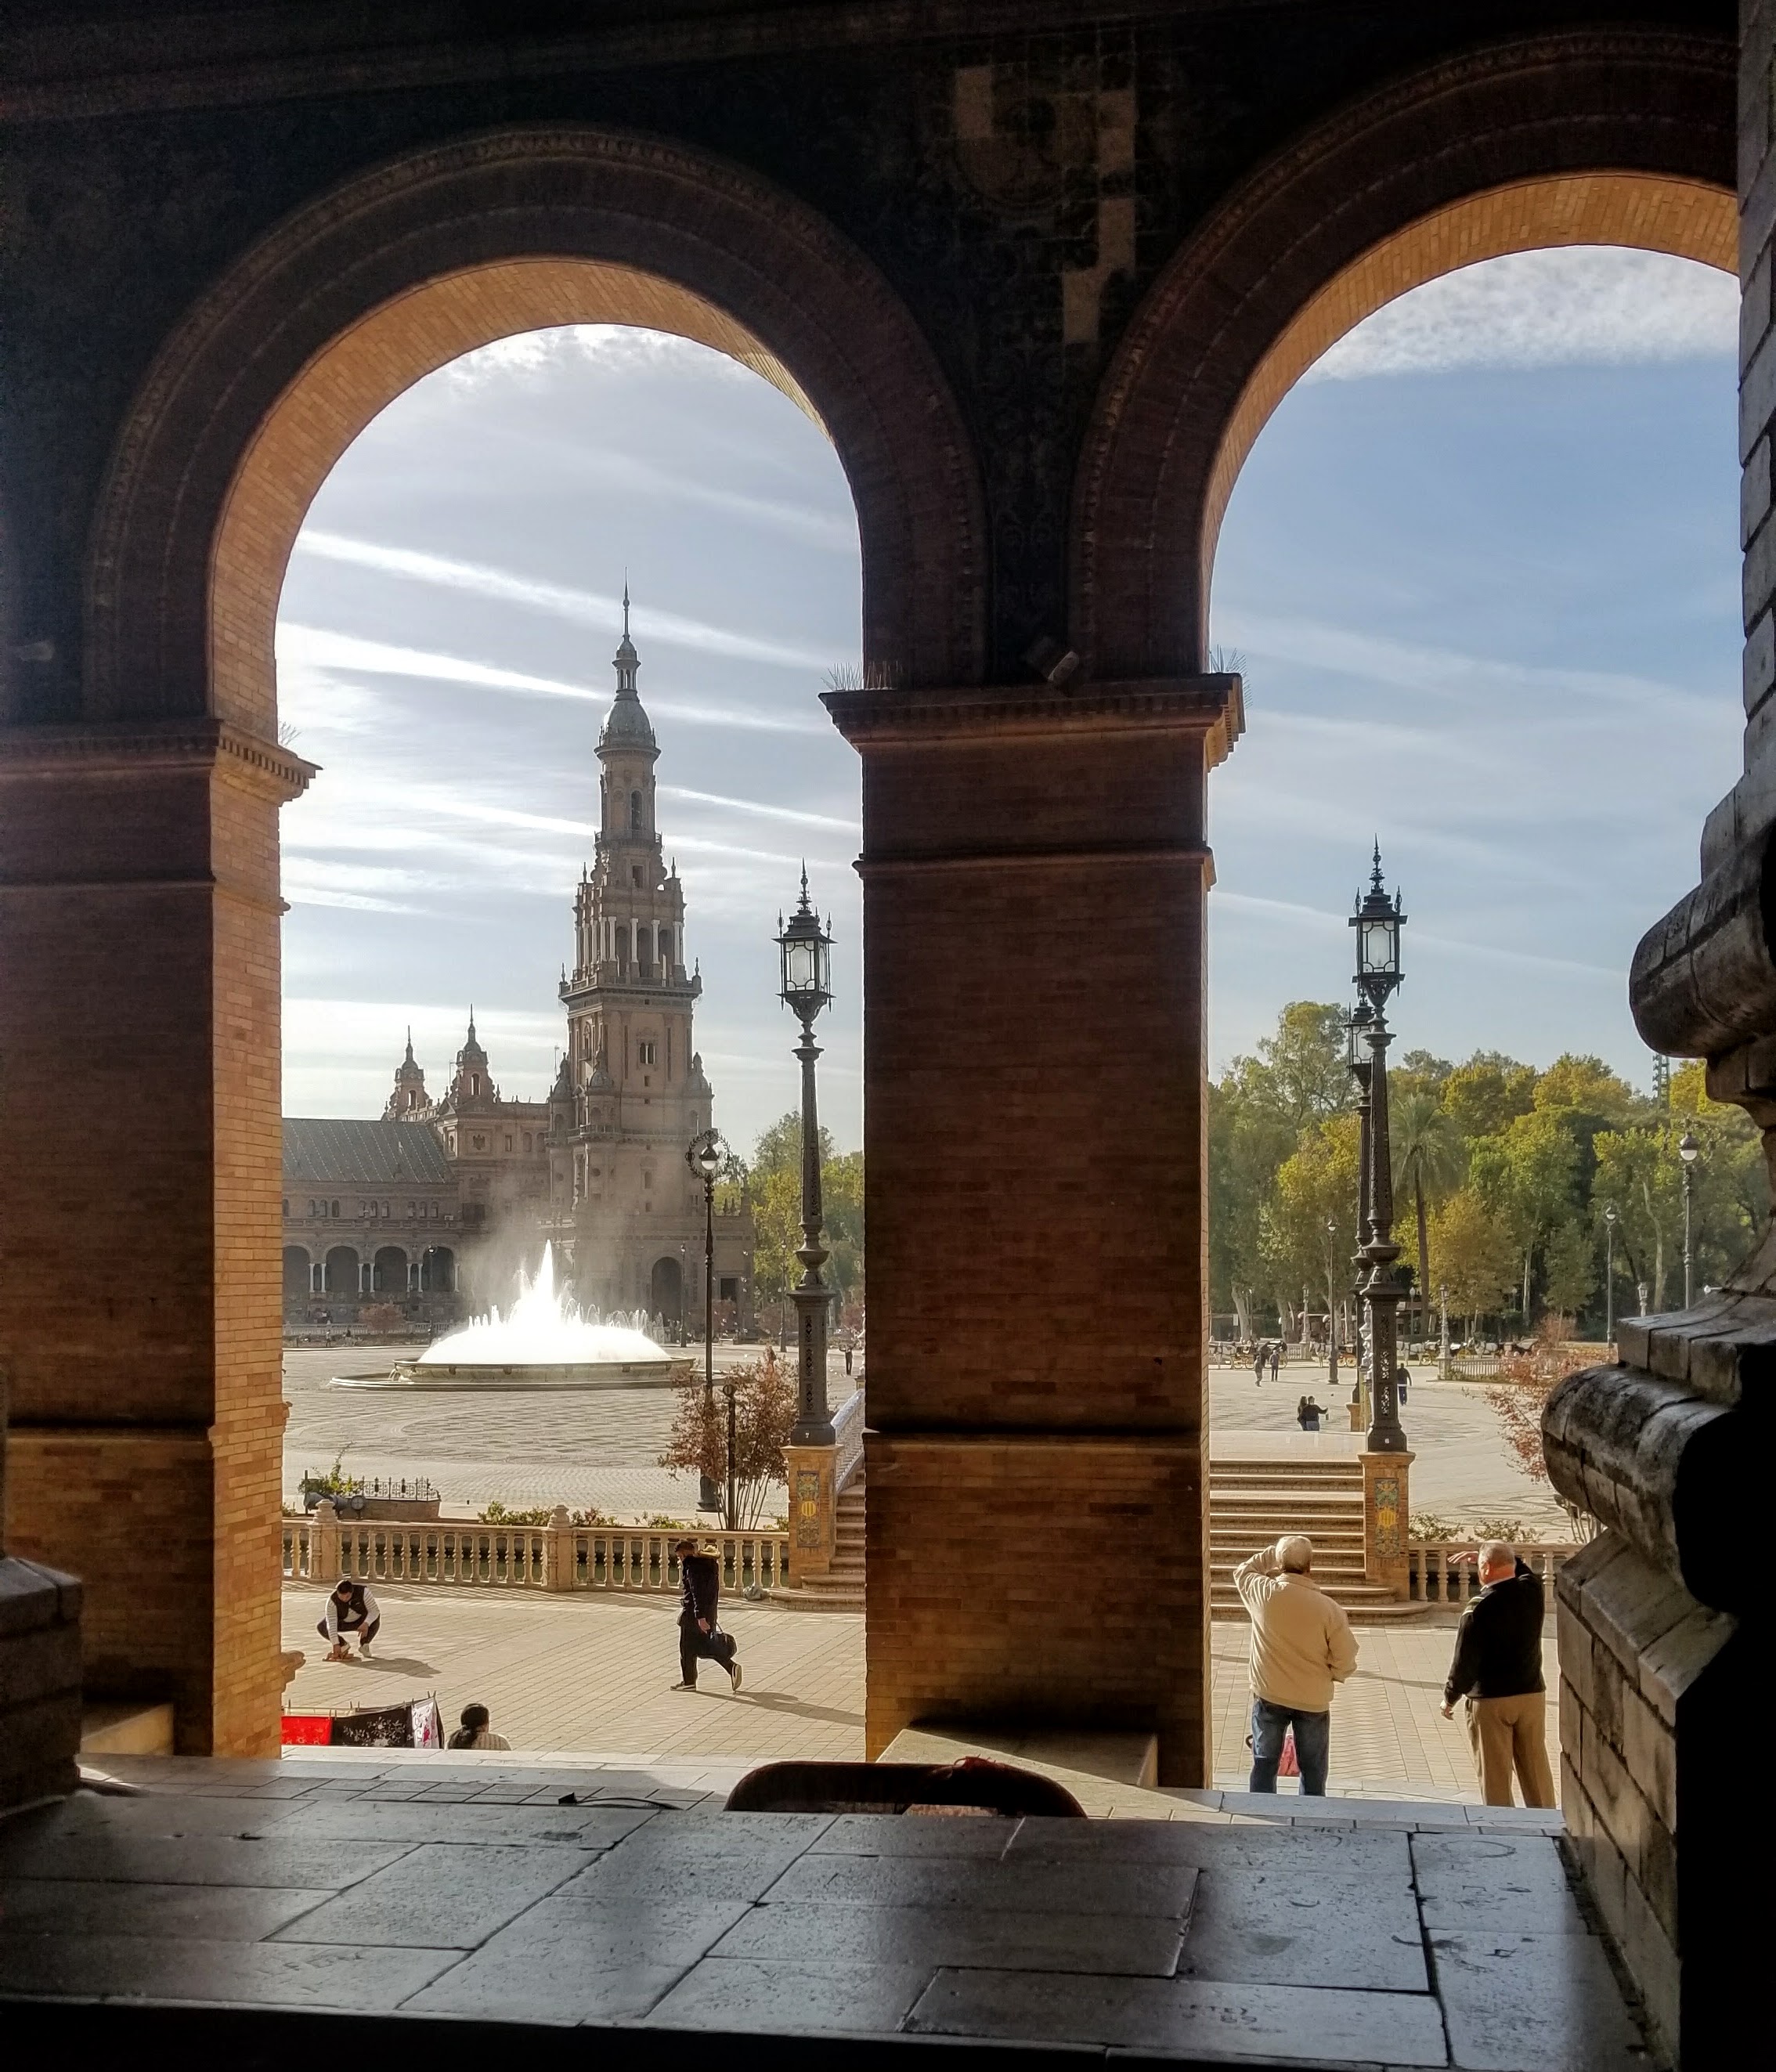 The Plaza D'Espana